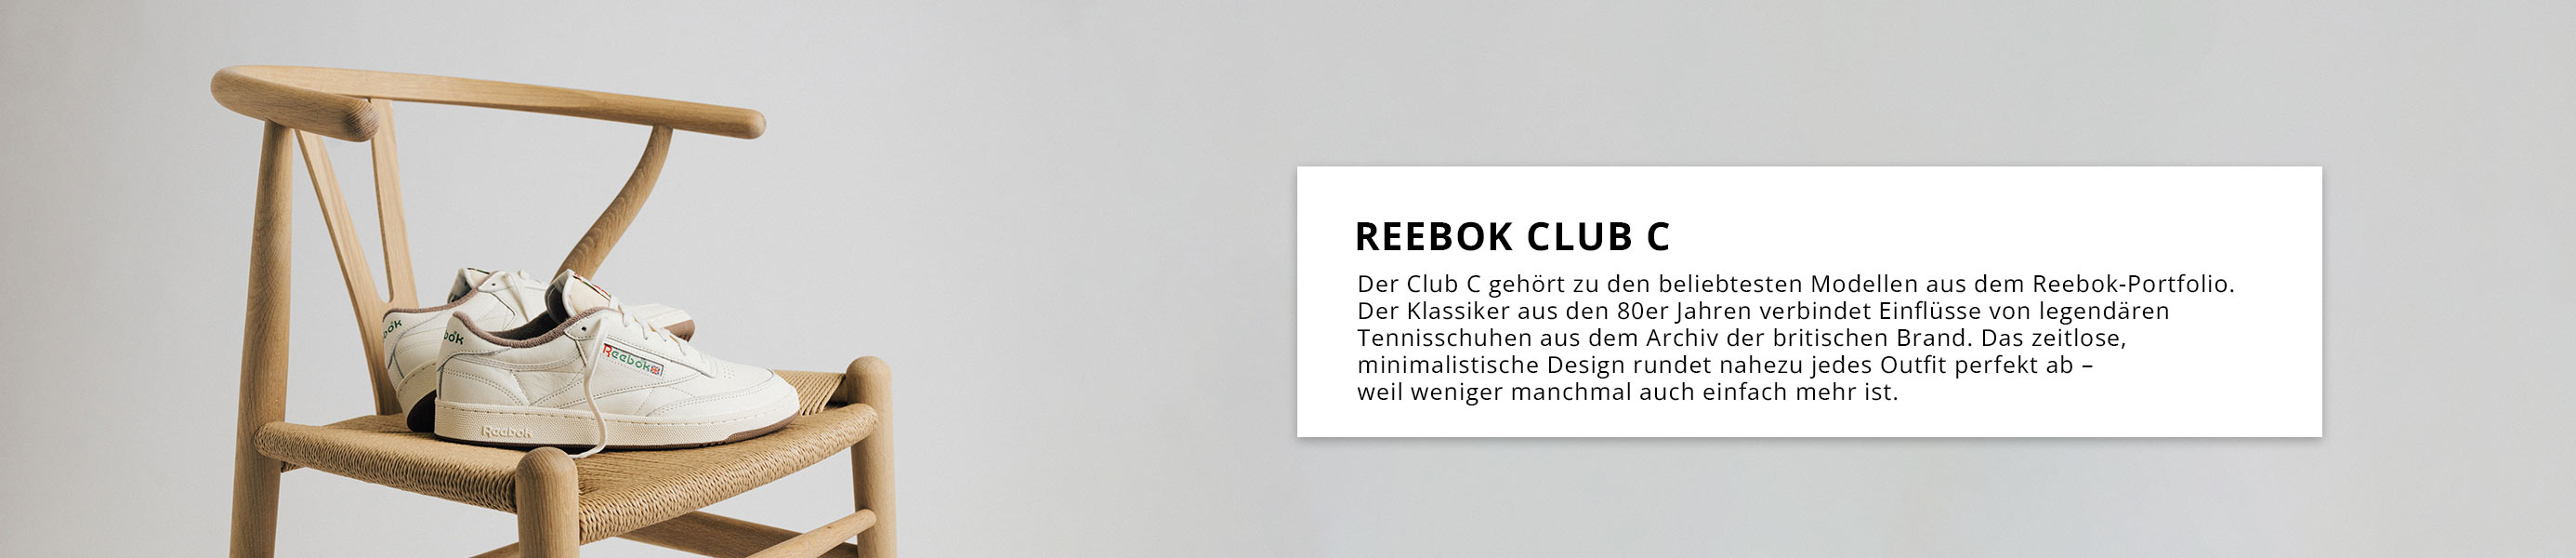 Reebok Club C